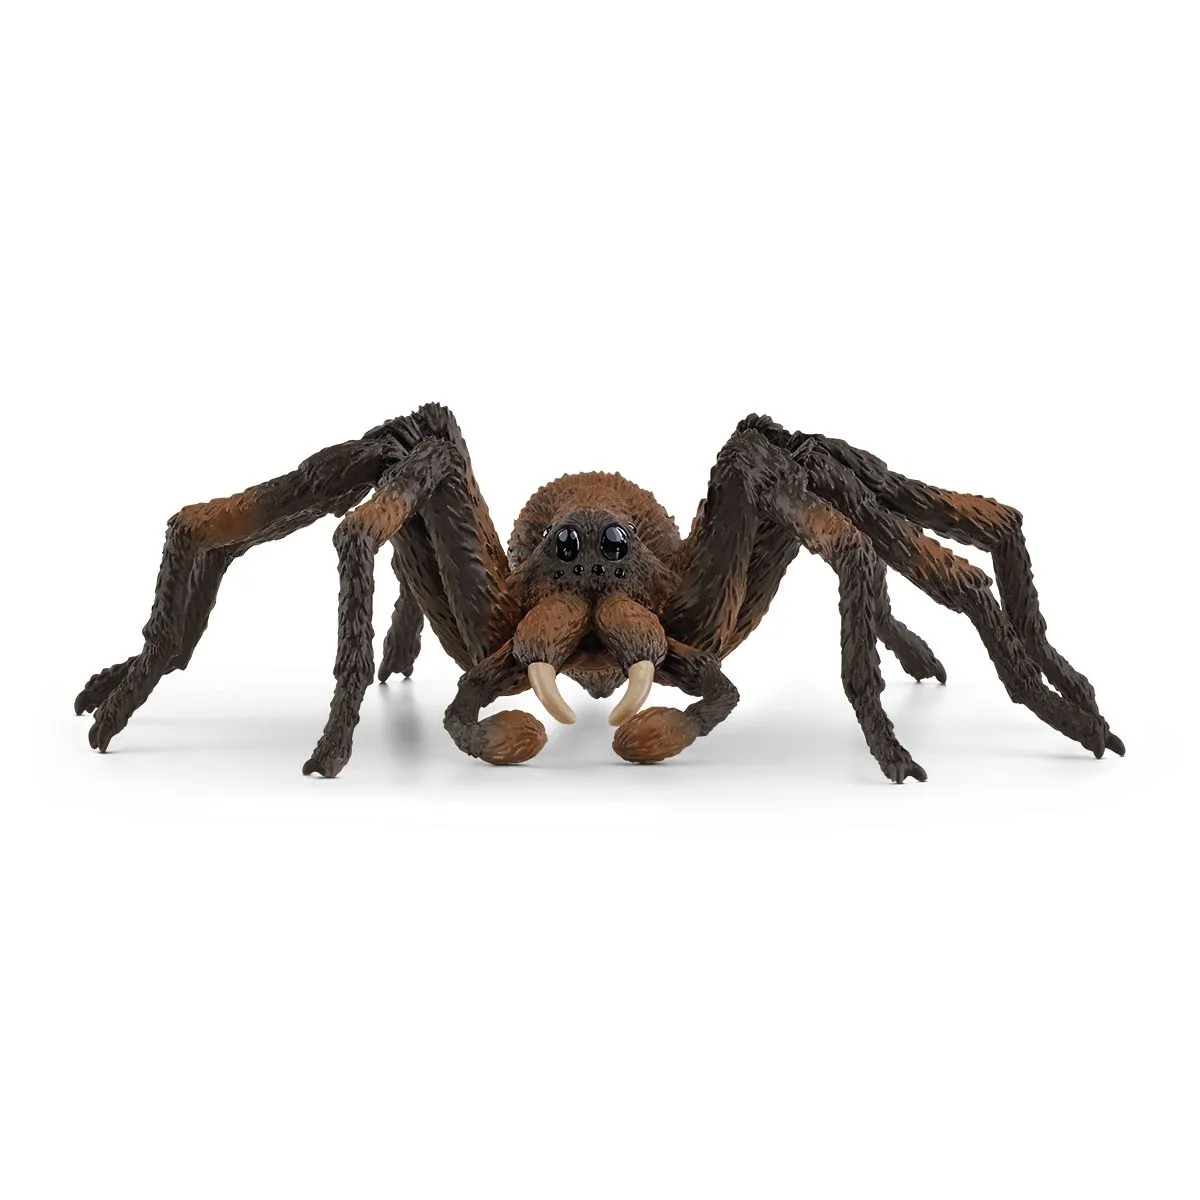 Aragog the Giant Spider